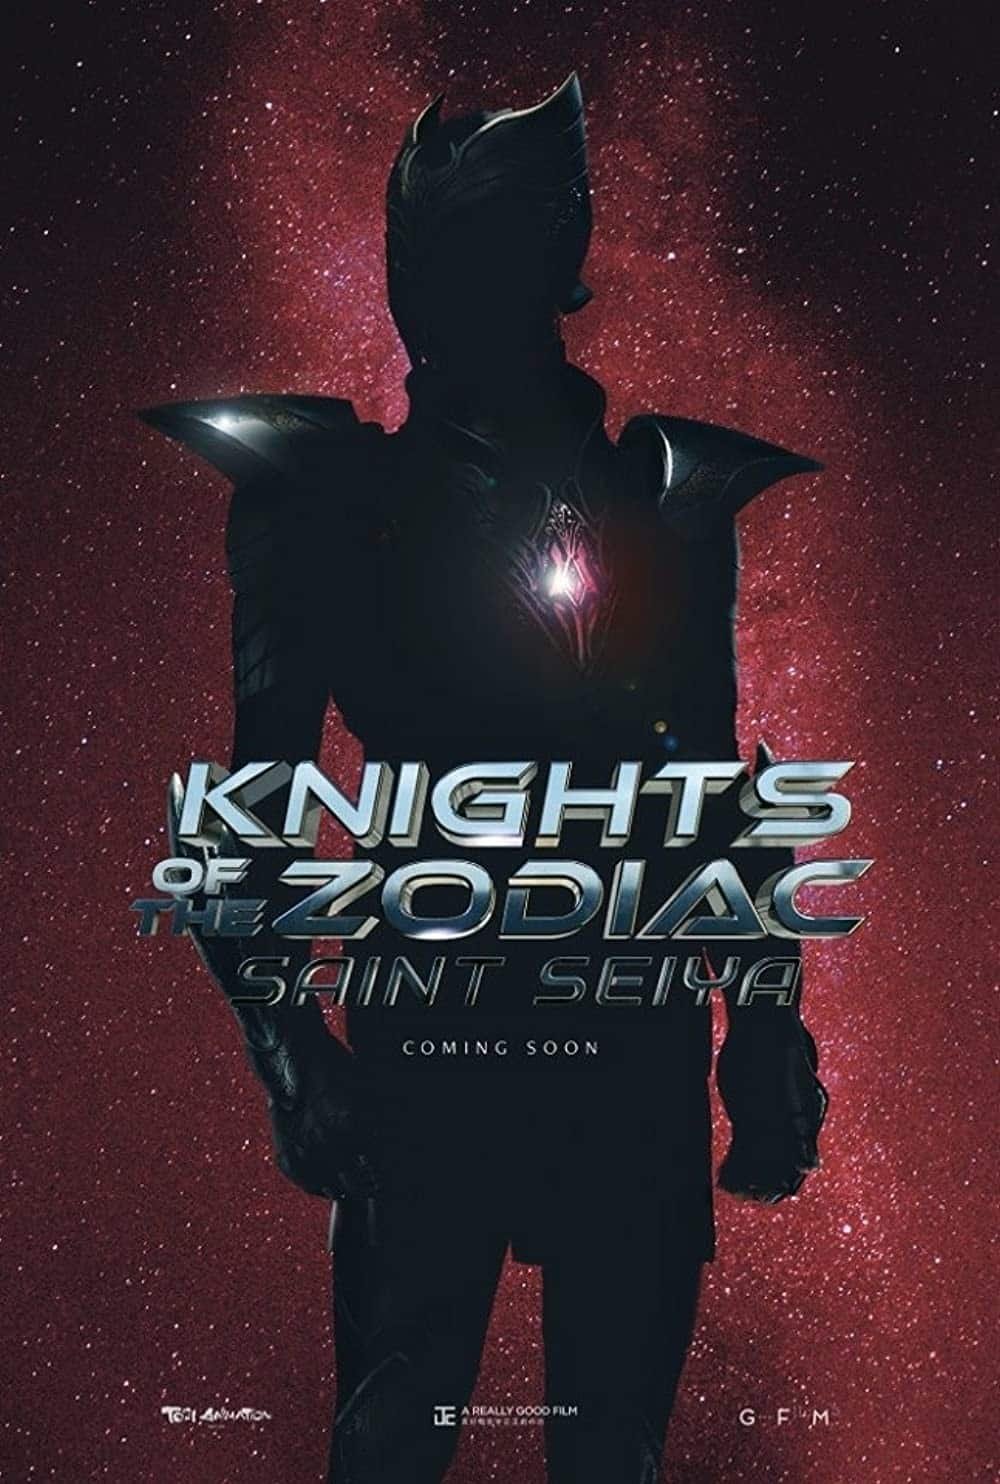 saint seiya knights zodiac live film poster